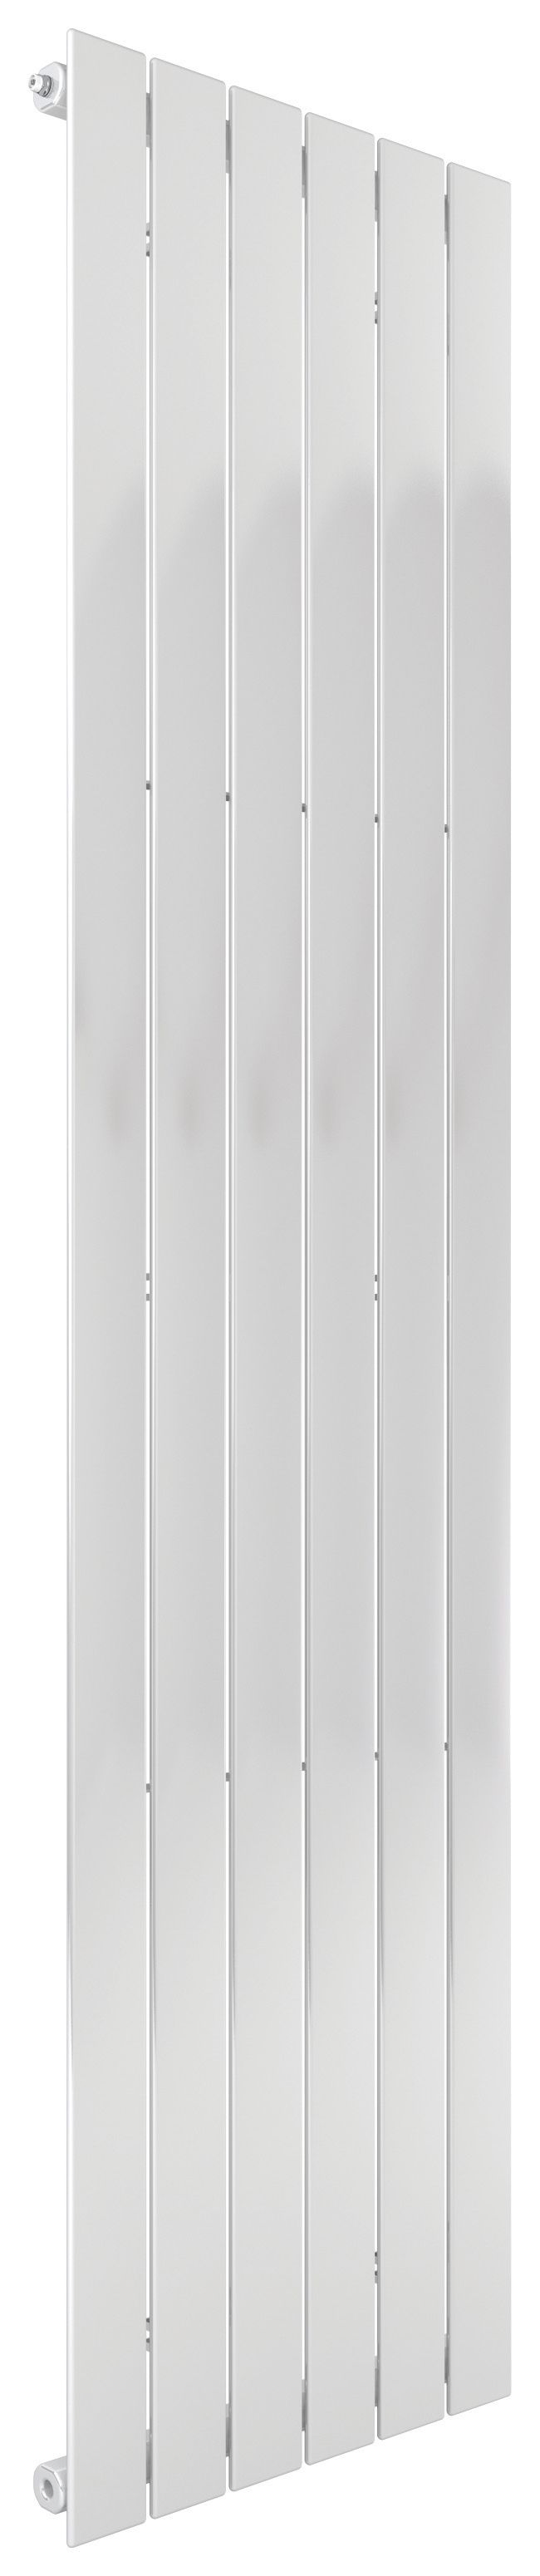 Image of Henrad Verona Vertical Designer Radiator - White 2000 x 588 mm